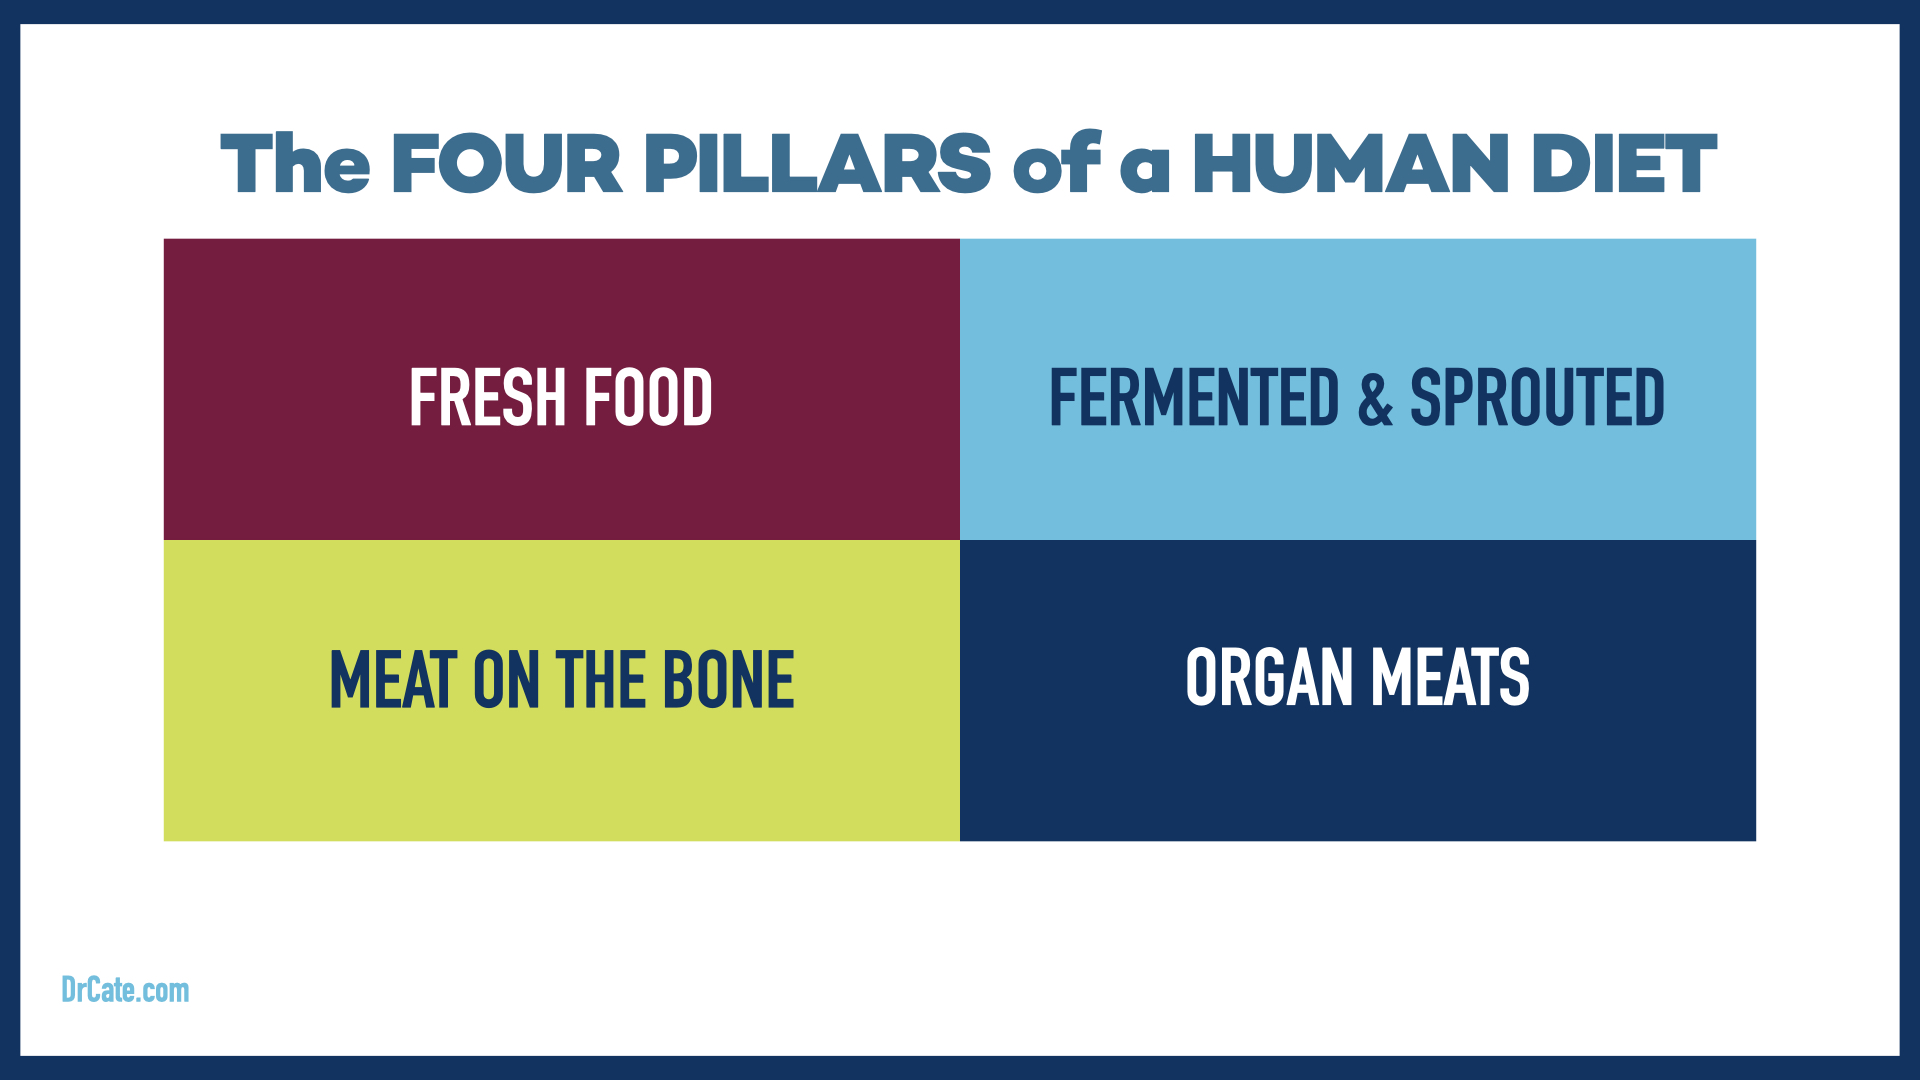 FOUR PILLARS OF THE HUMAN DIET